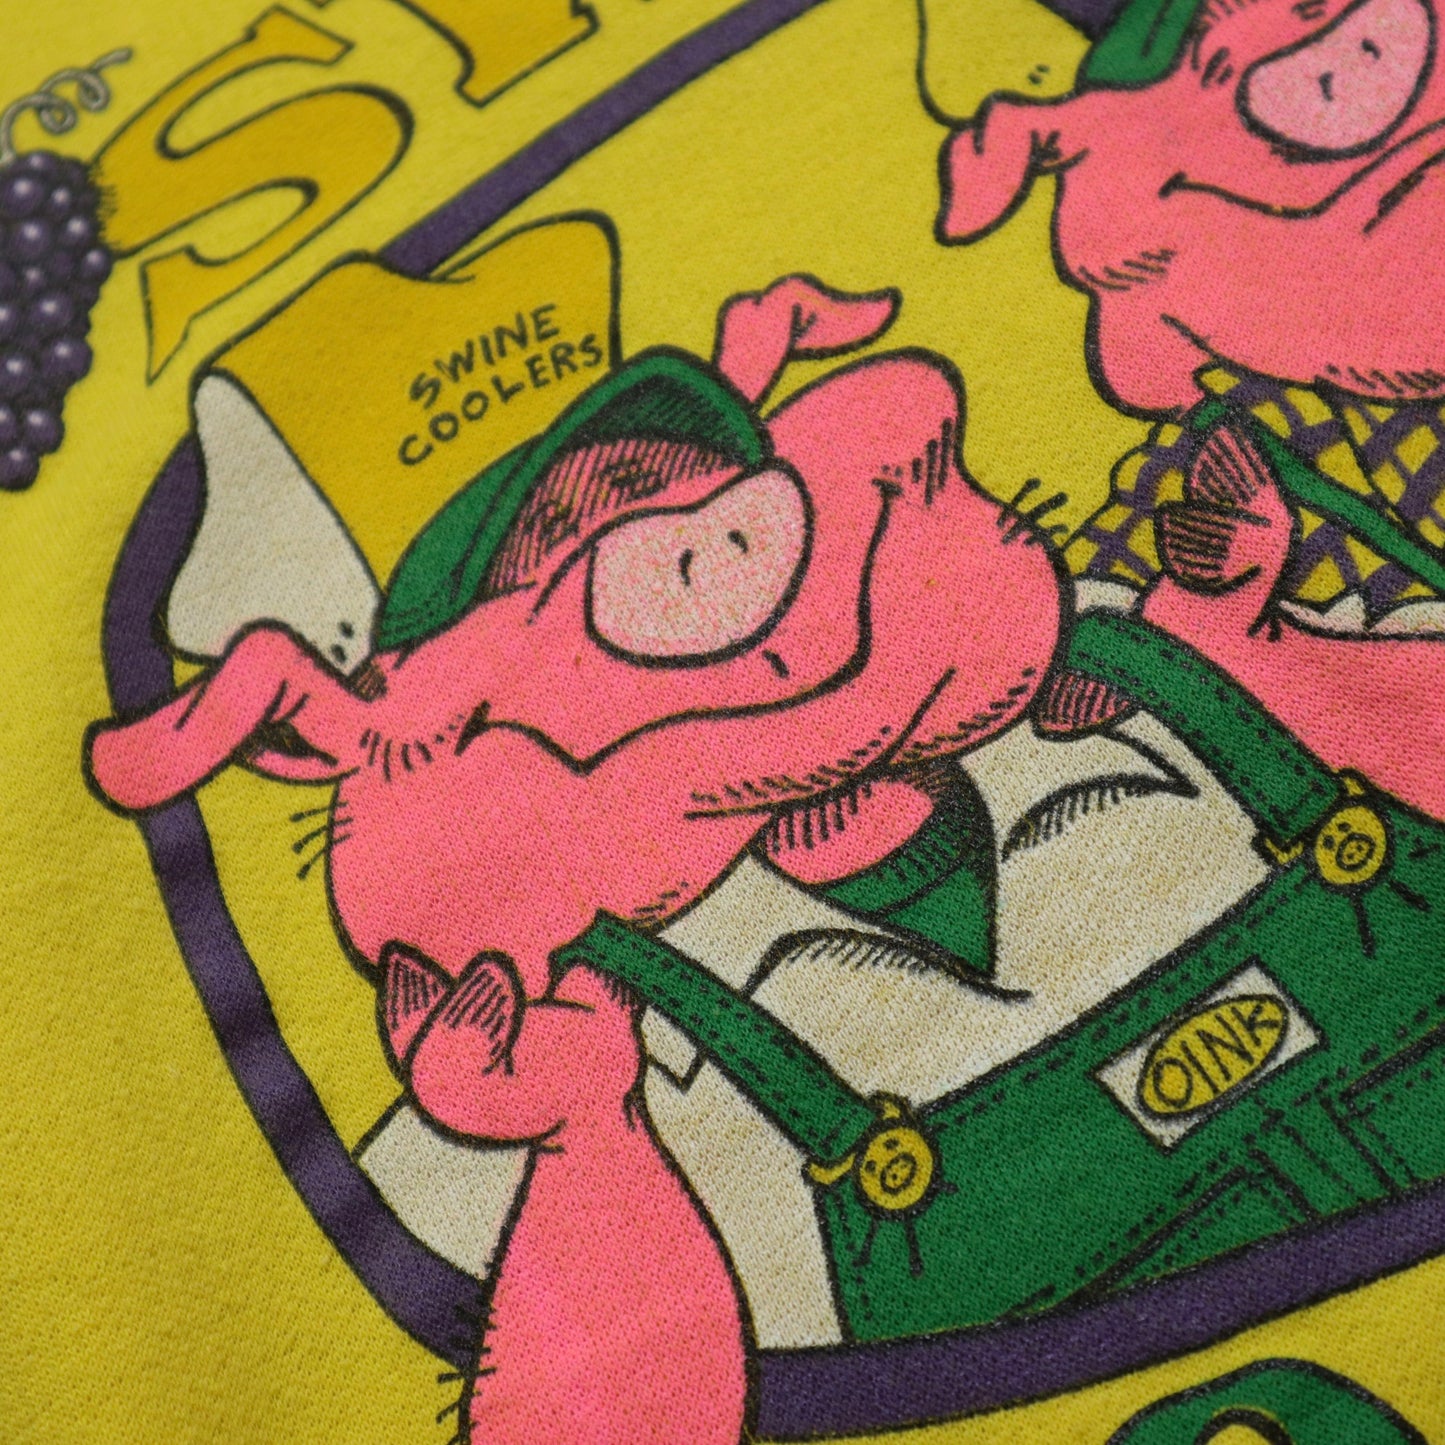 1980s 美國製 Swine Coolers Sweatshirt 豬豬黃色短袖衛衣